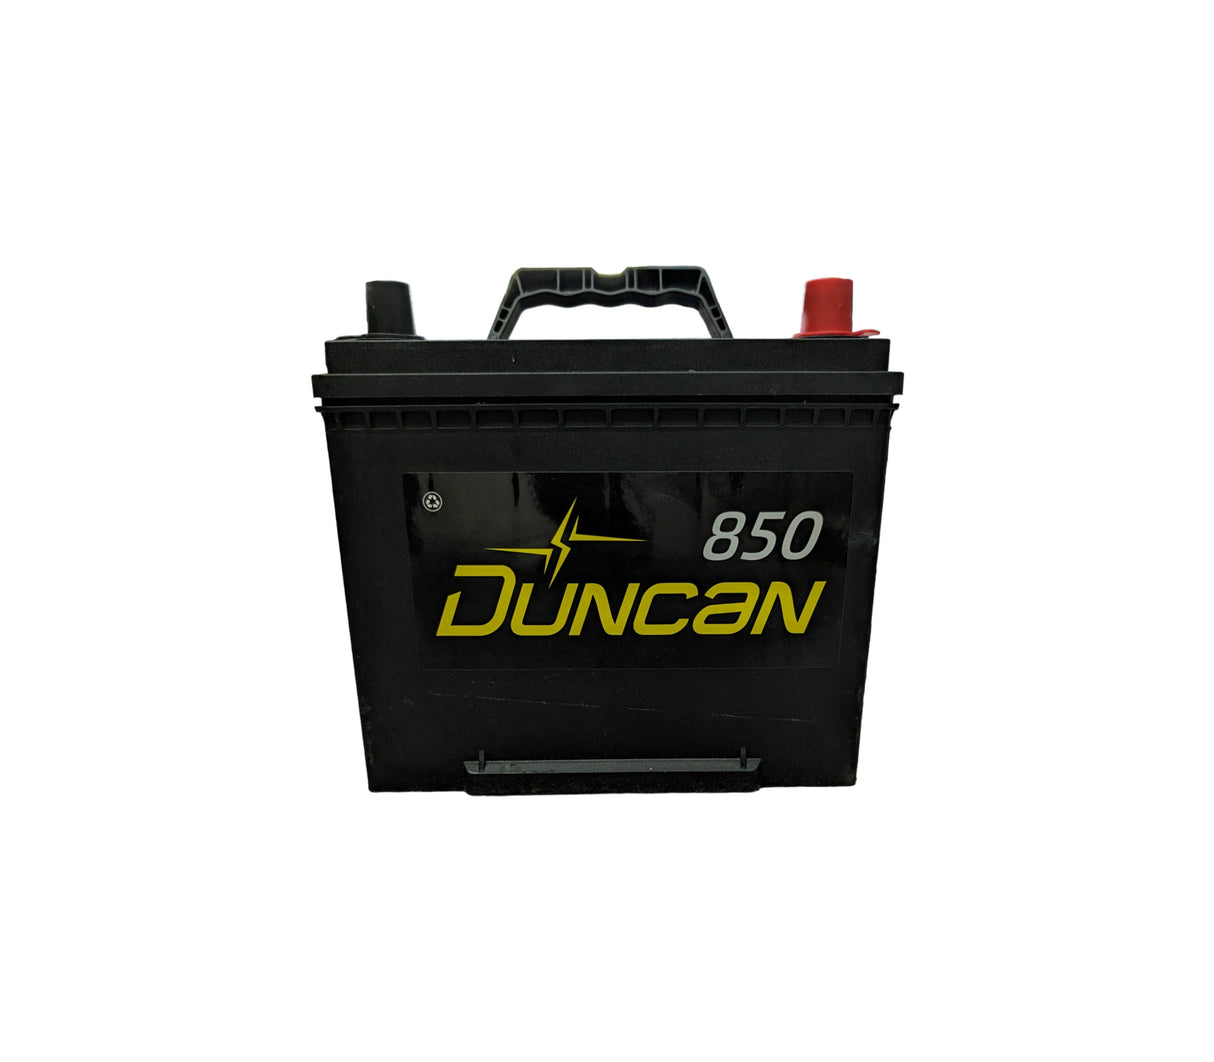 Bateria de vehículo D22MR-850 Duncan